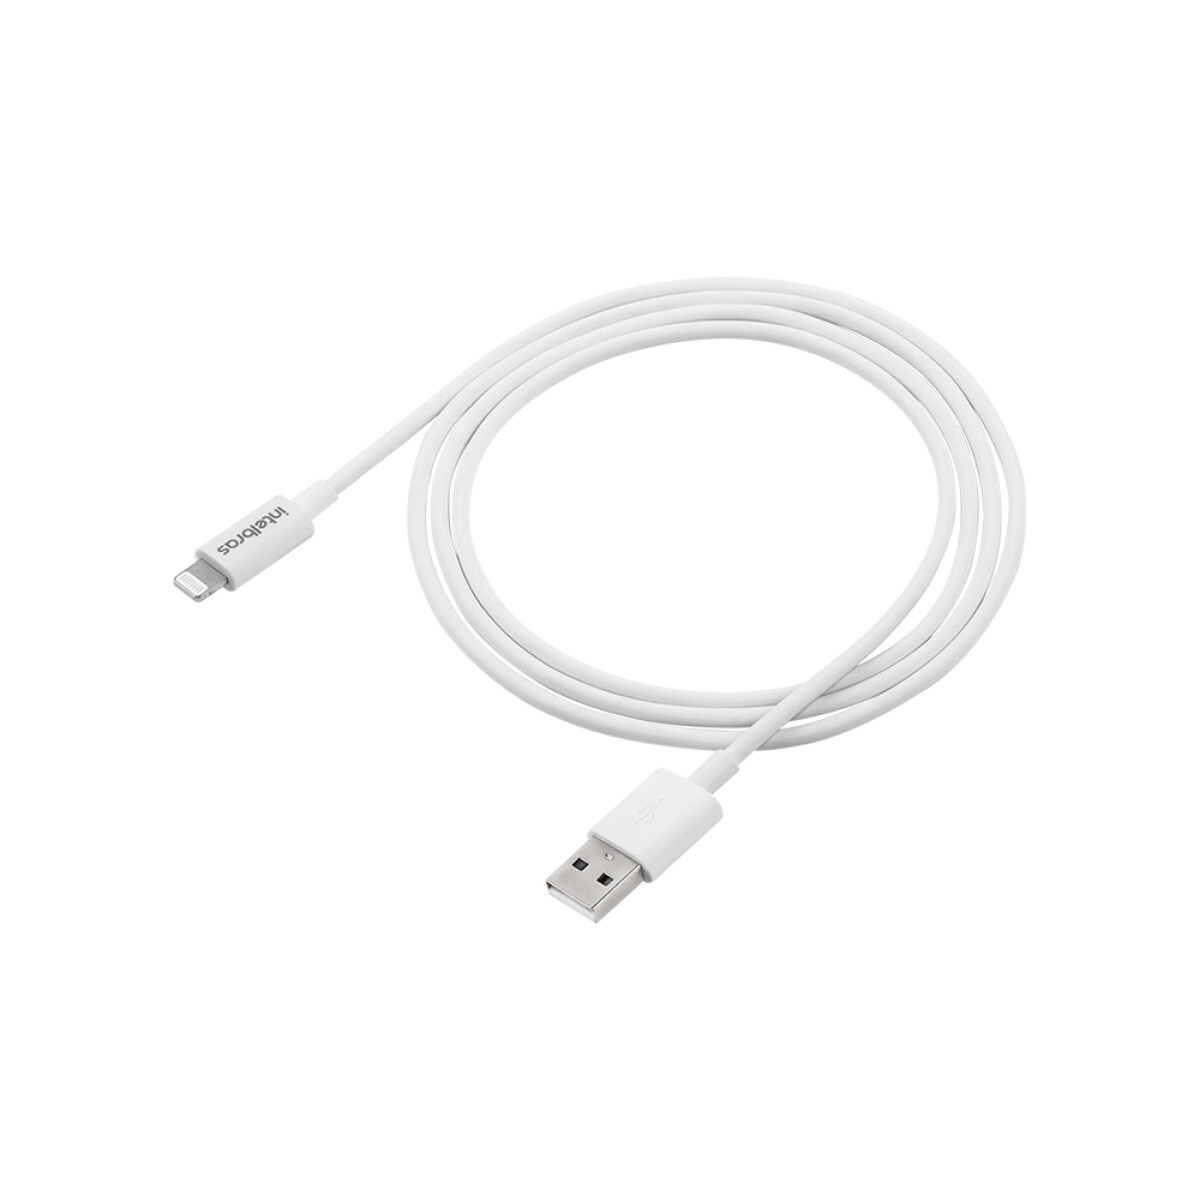 Cable USB Lightning 1,2 Mts PVC - EUAL 12PB | INTELBRAS - Cable Usb Lightning 1,2 Mts Pvc - Eual 12pb | Intelbras 